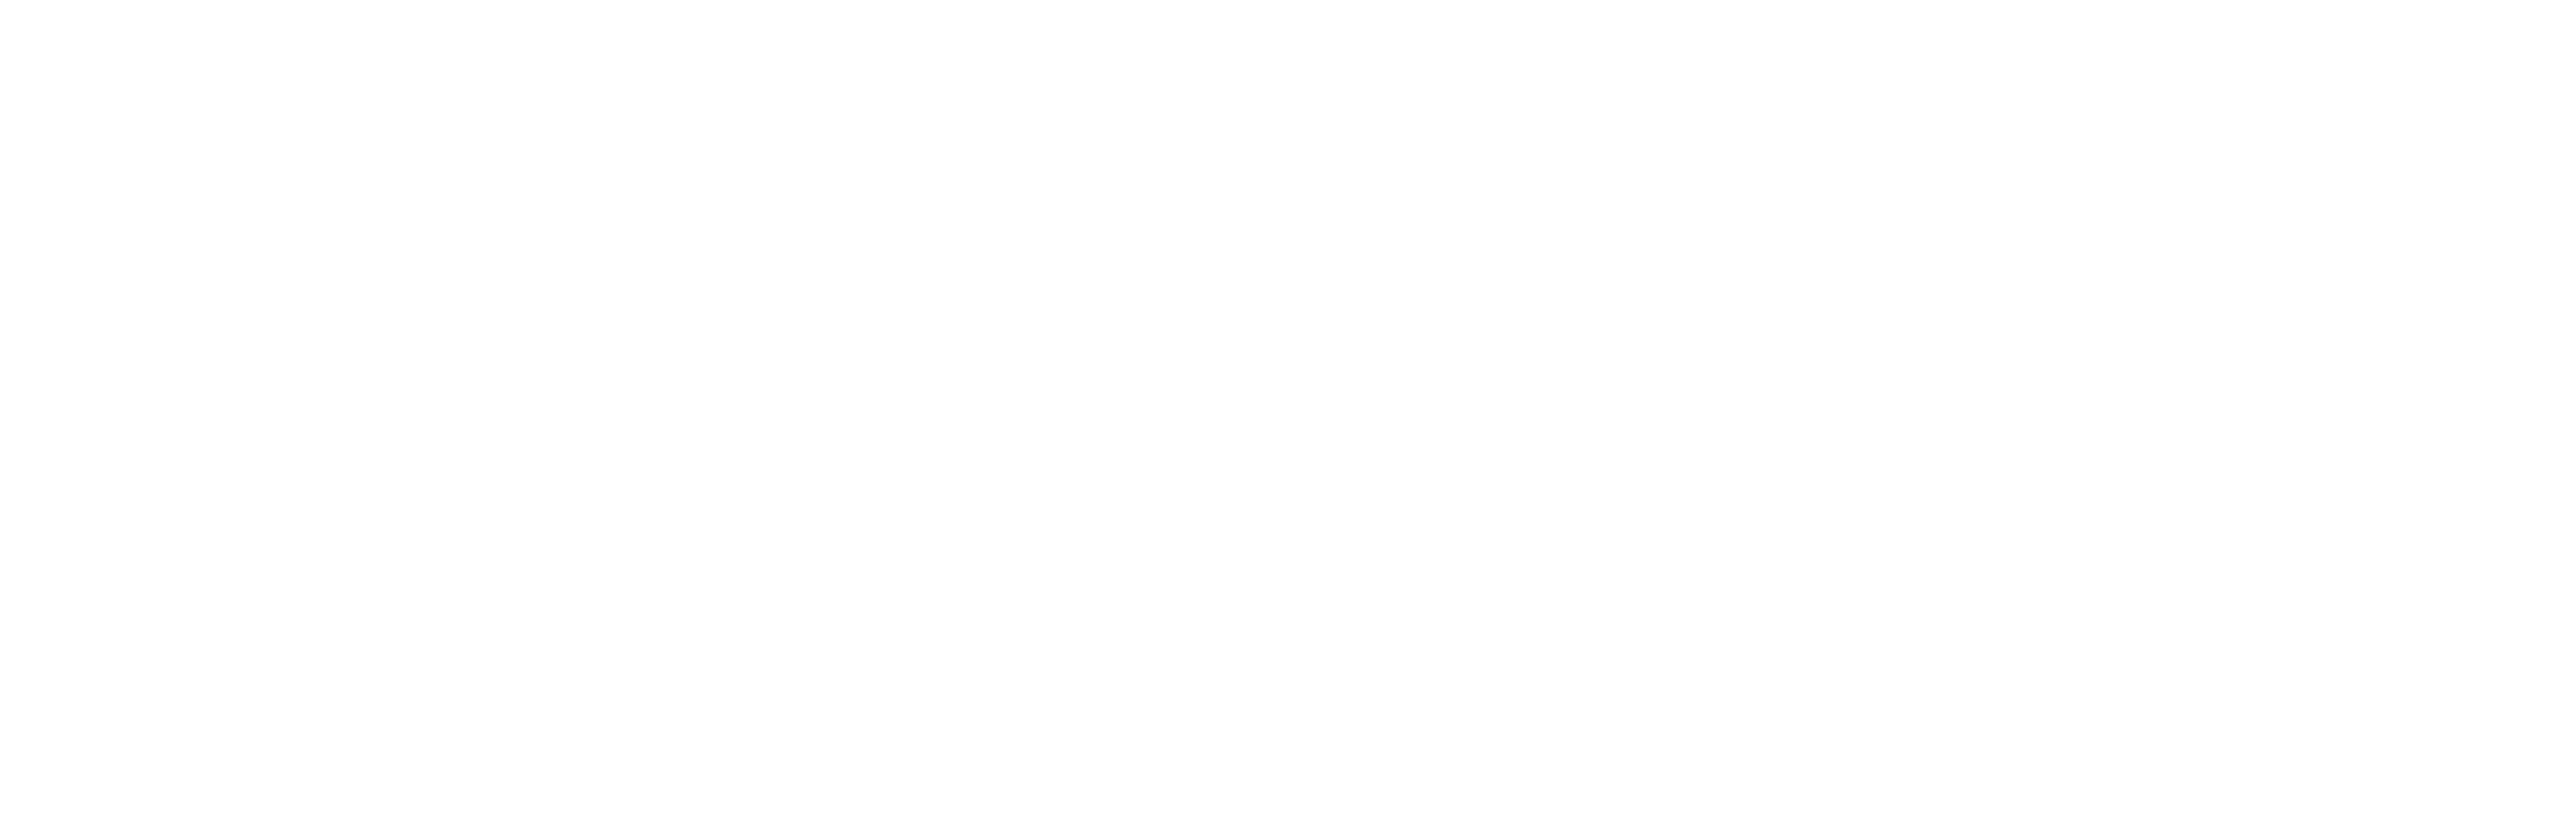 Prirodoslovni muzej Slovenije